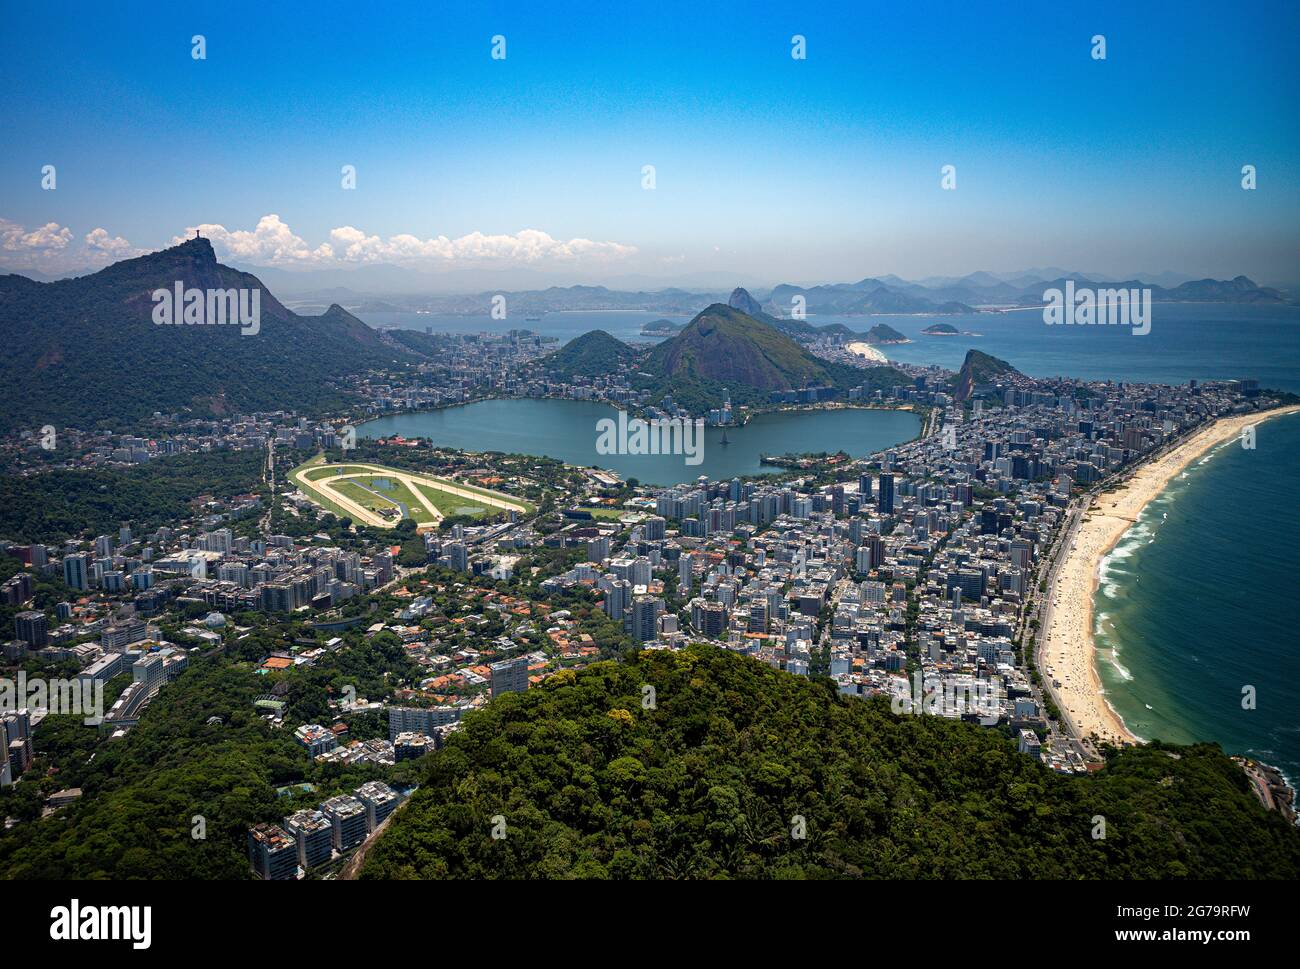 La vista panoramica di Ipanema/Leblon Beach e Lagoa Rodrigo de Freitas, vista dalla cima del Dois Irmaos Two Brothers Mountain a Rio de Janeiro, Brasile Foto Stock